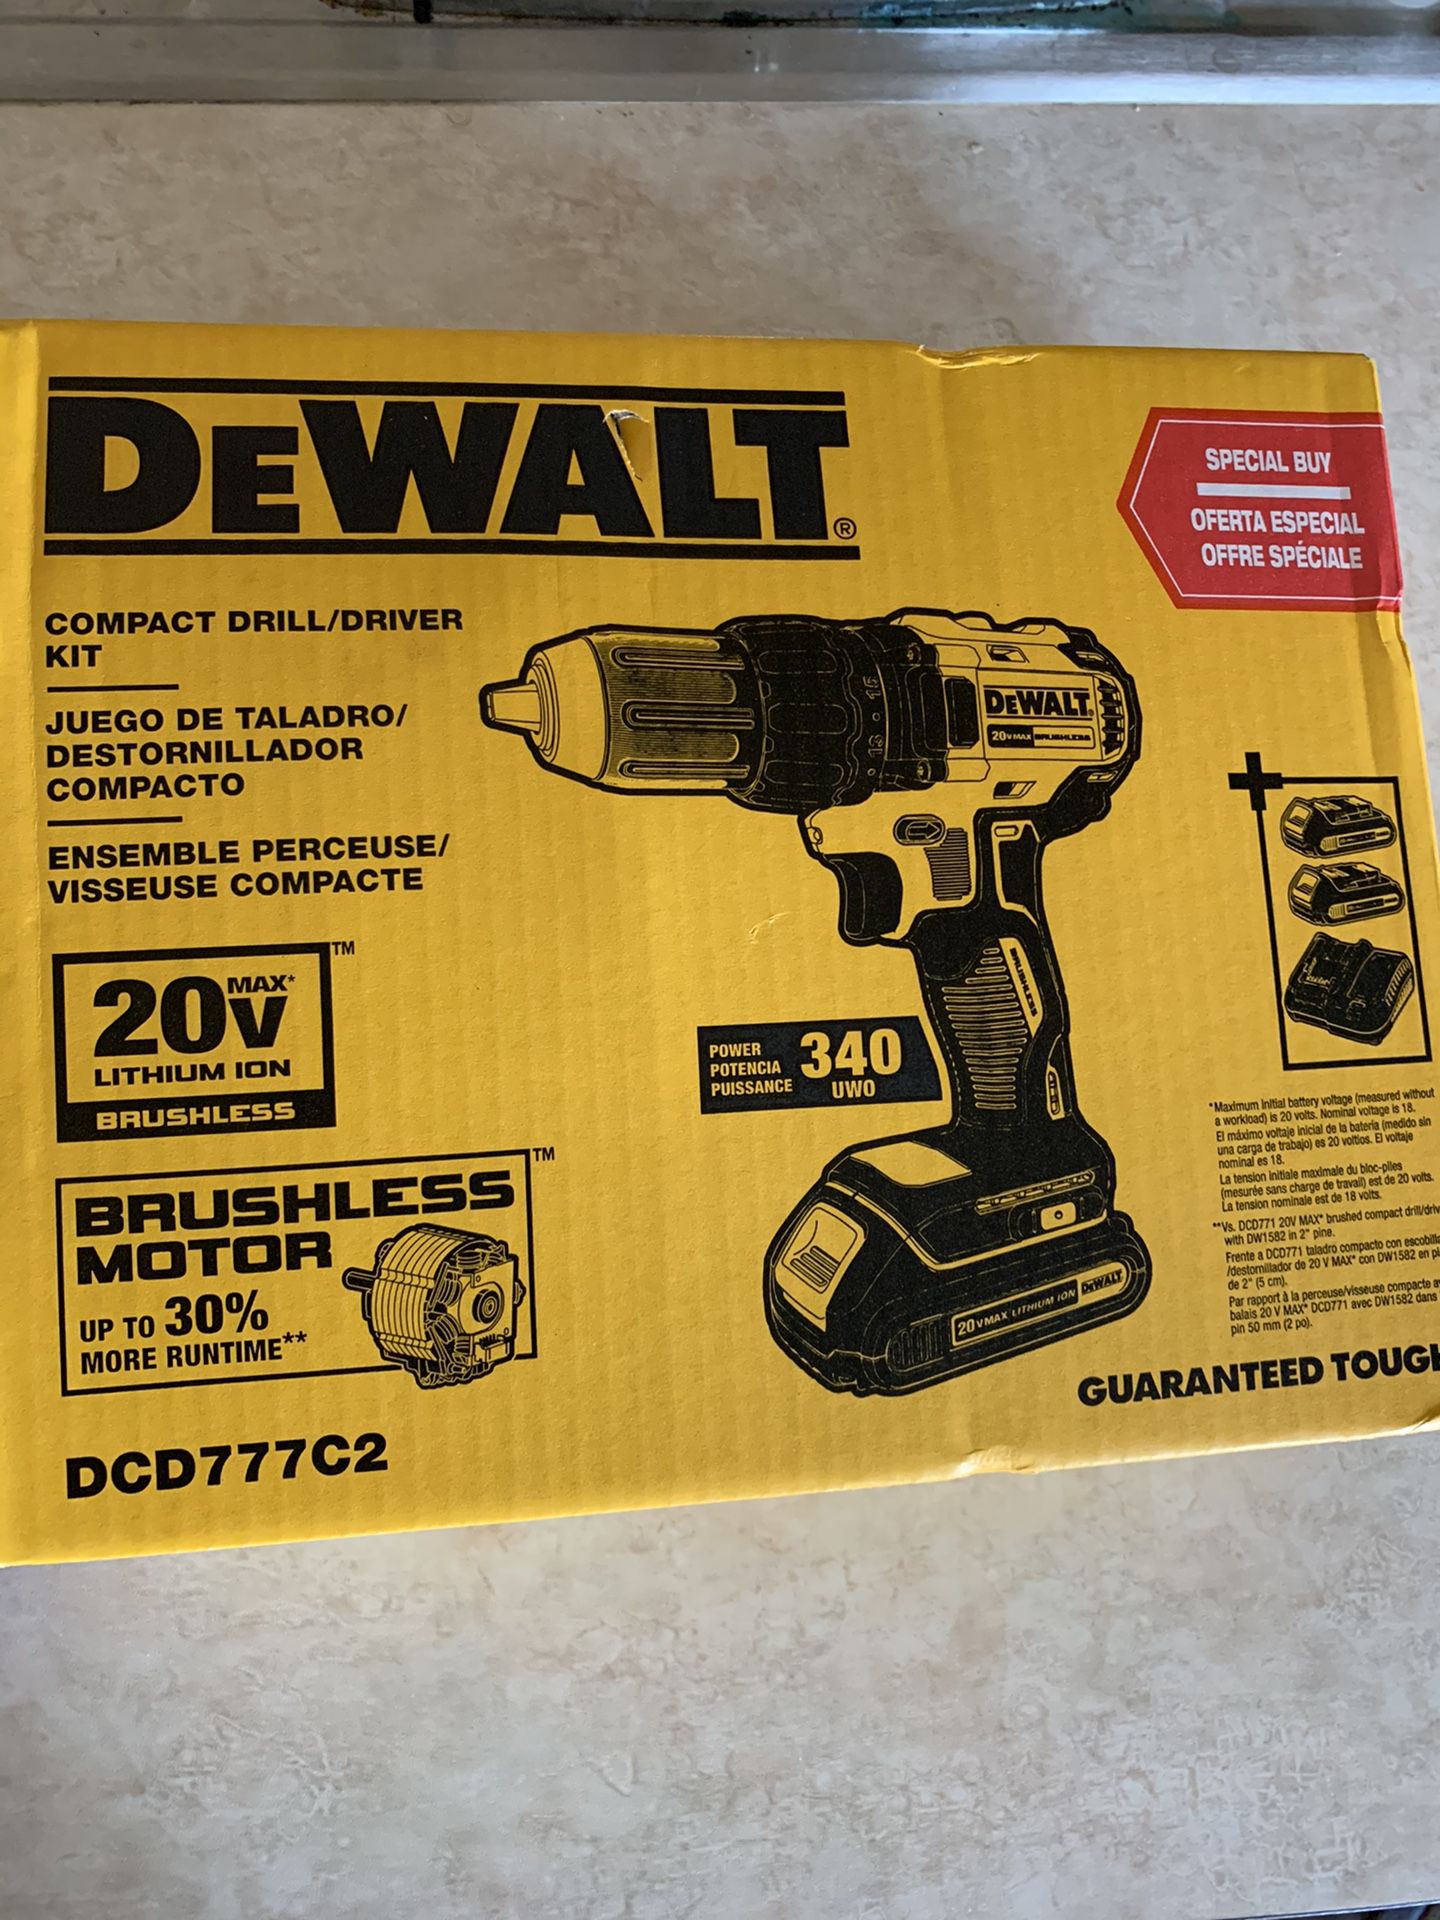 Dewalt compact drill / driver DCD7888C2